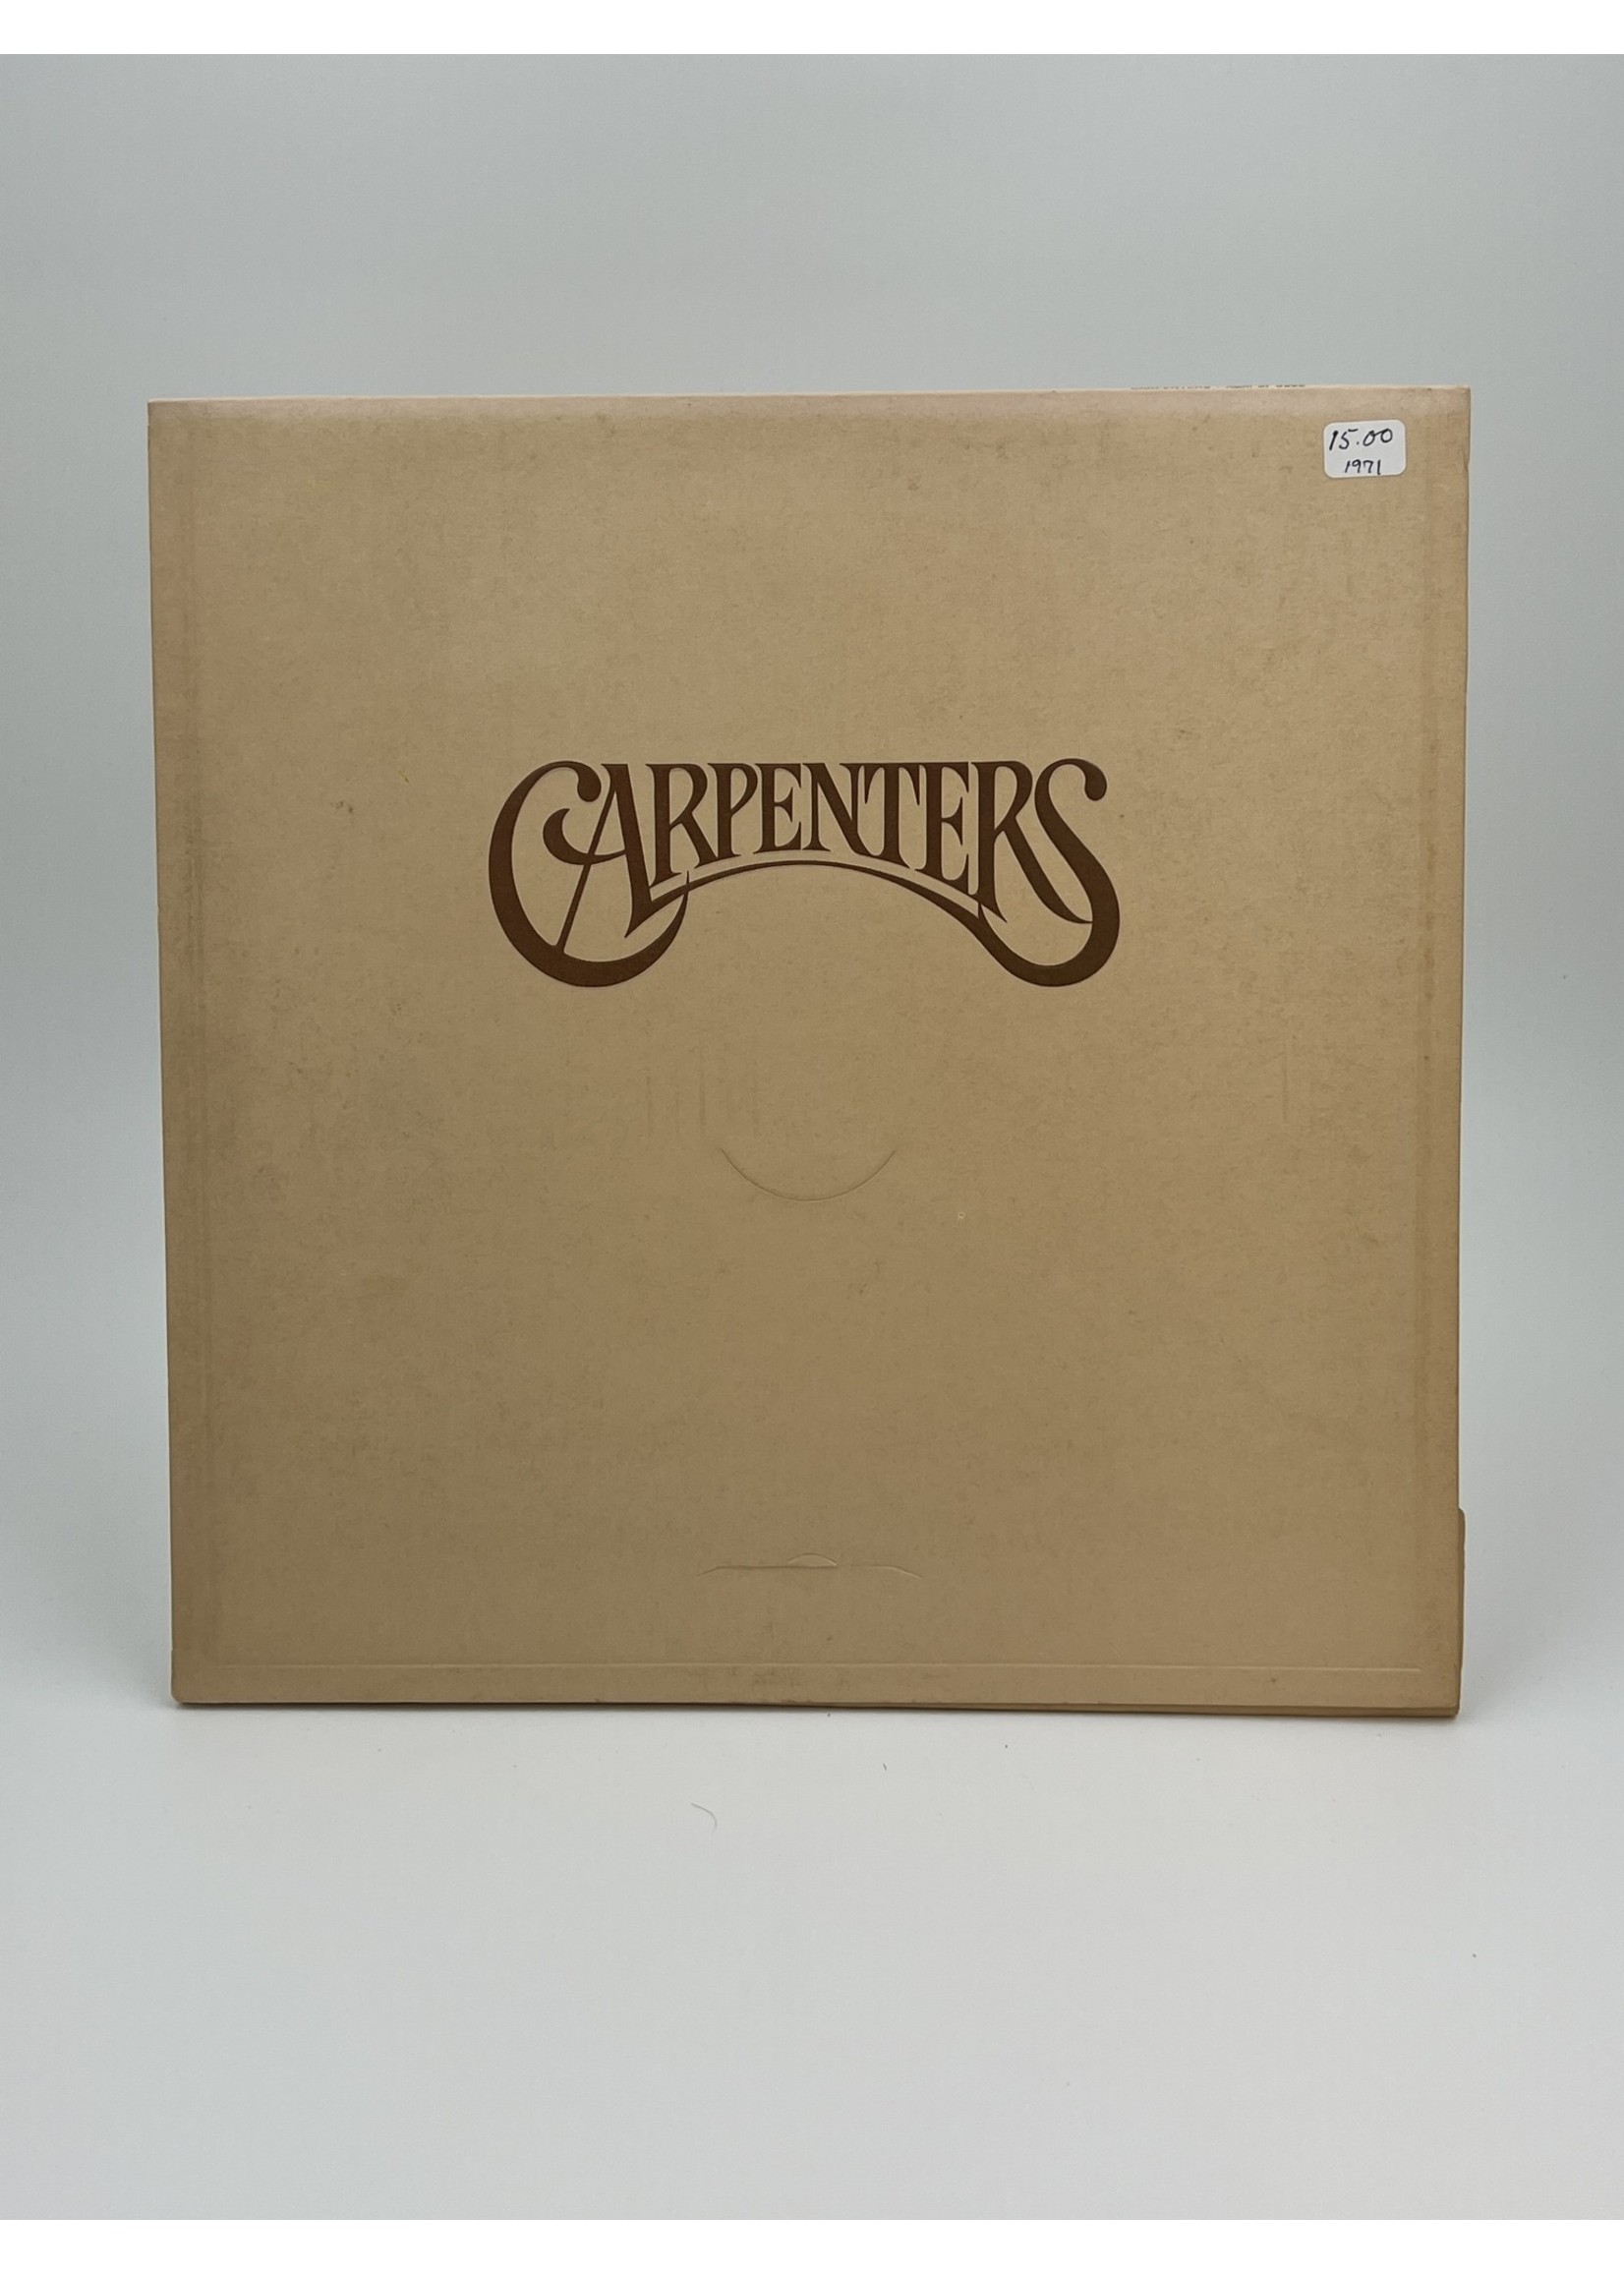 LP The Carpenters LP Record